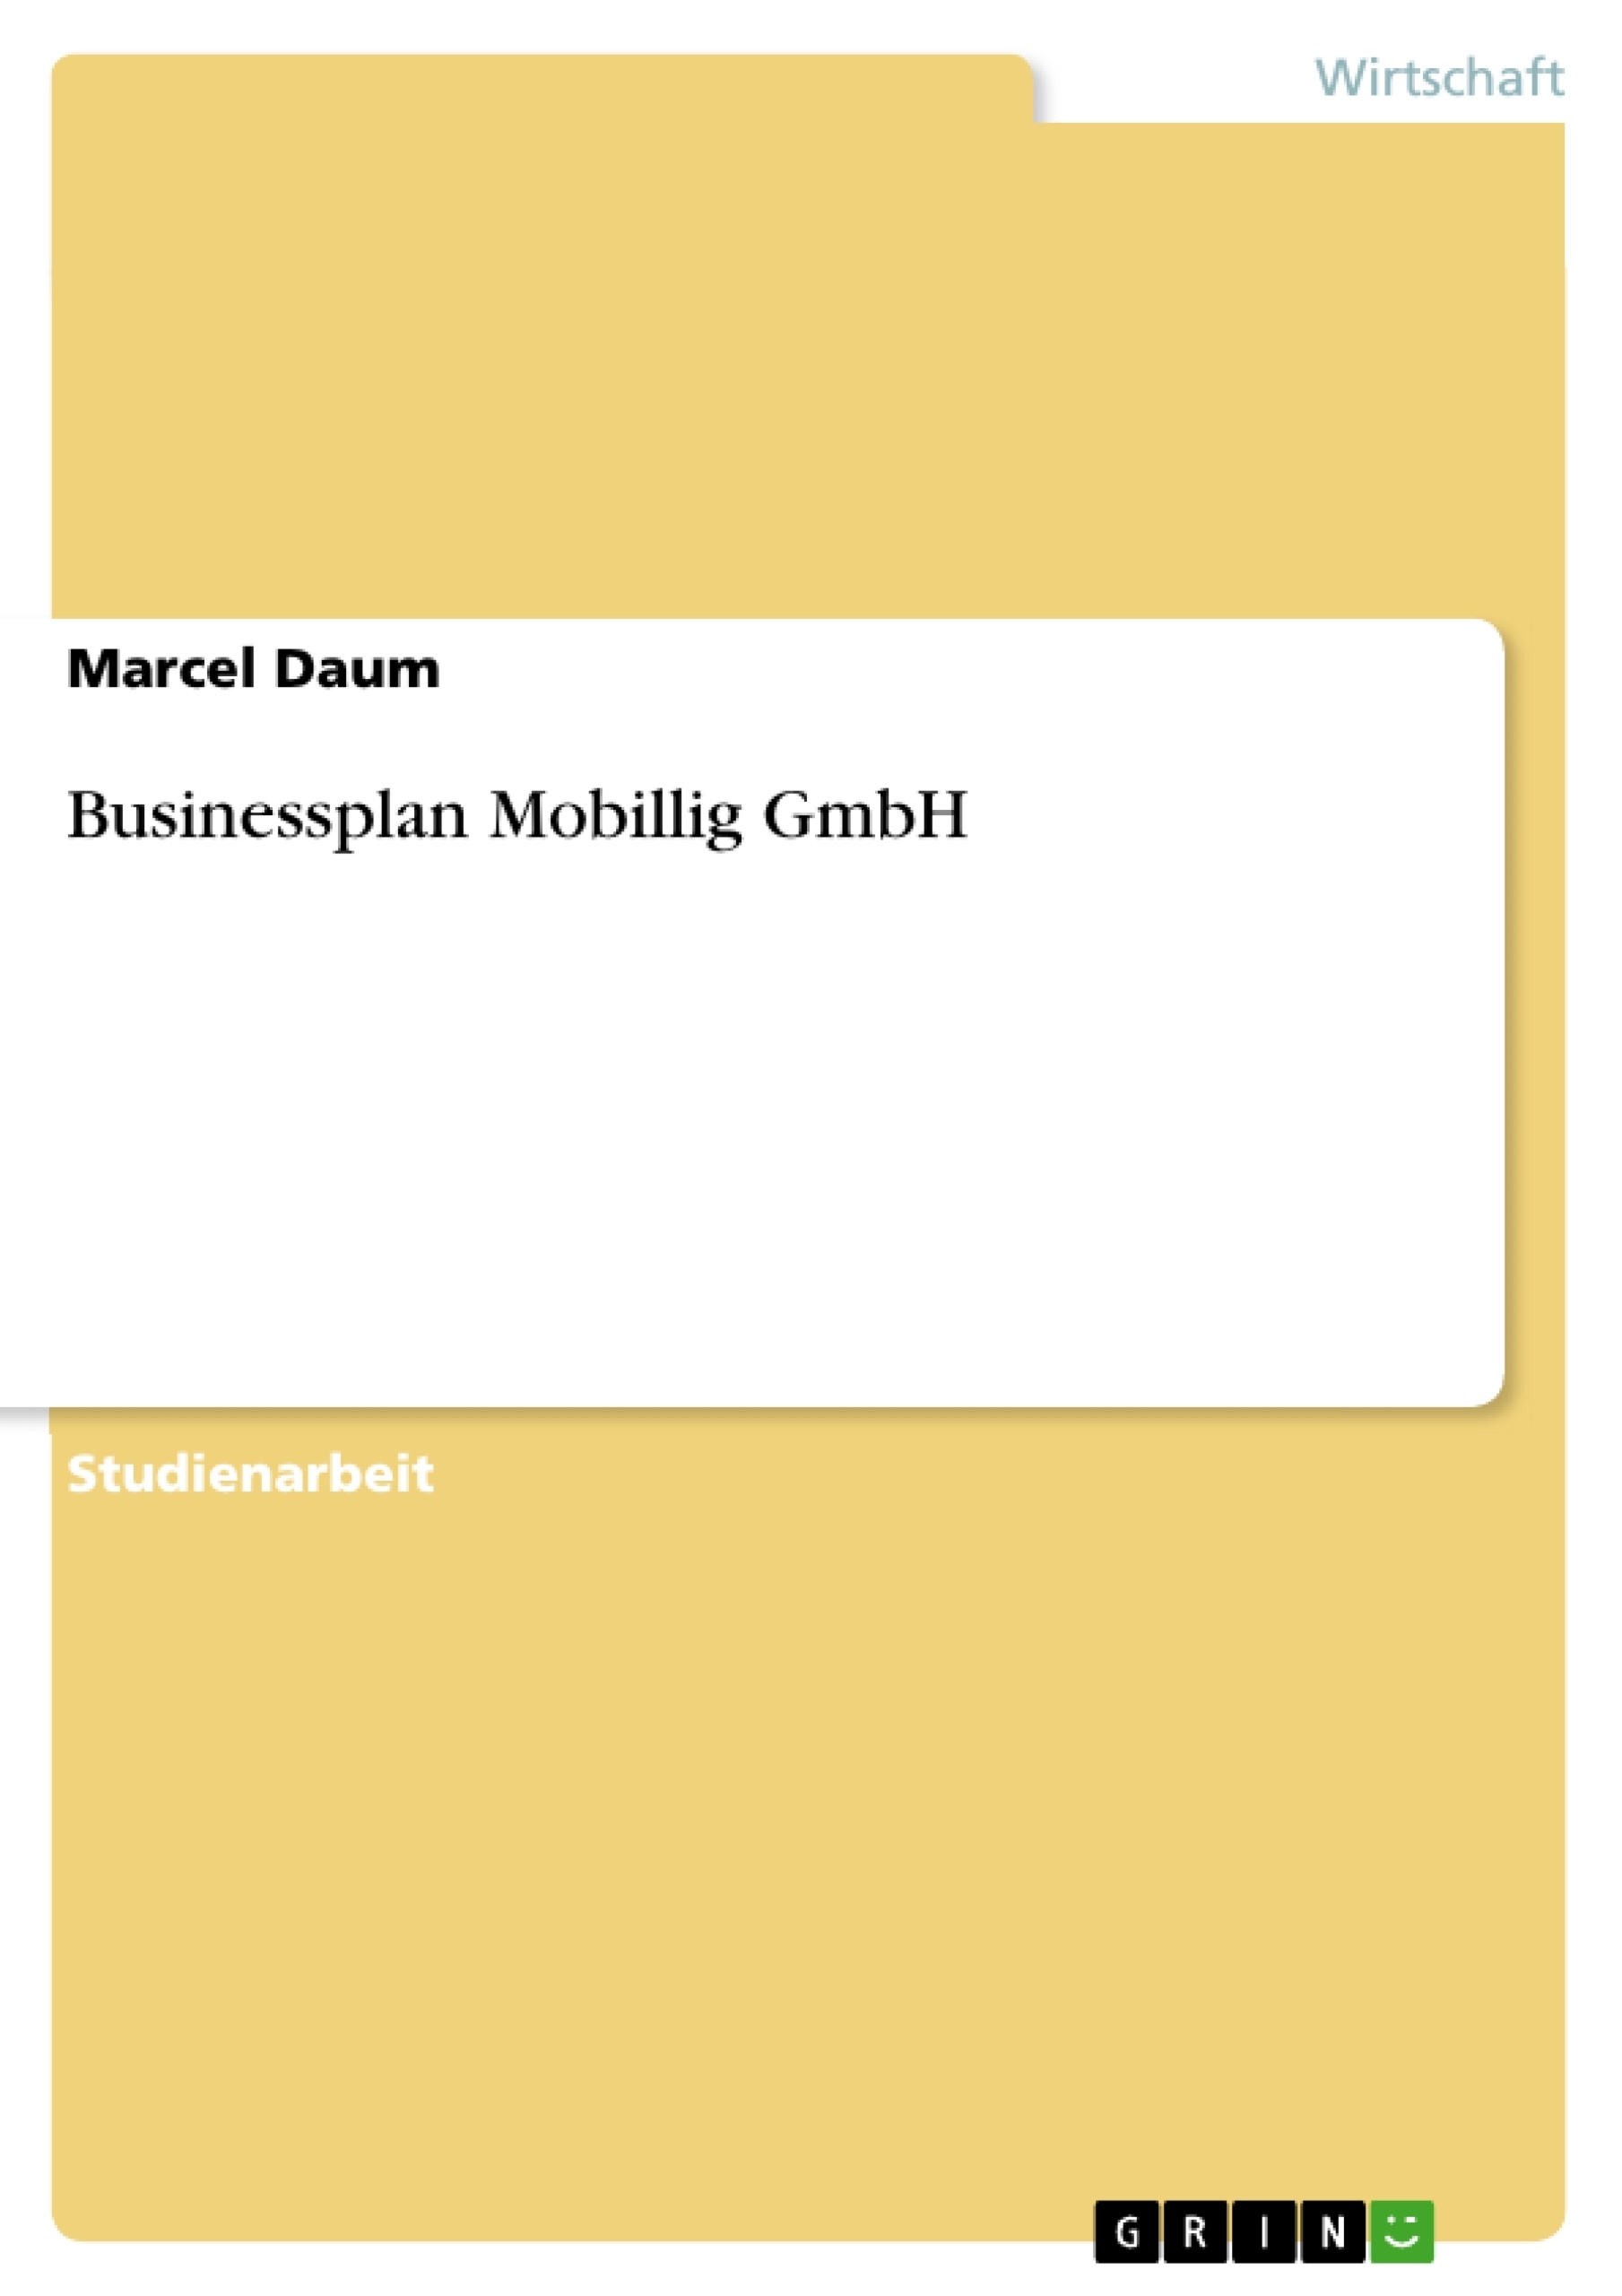 Título: Businessplan Mobillig GmbH